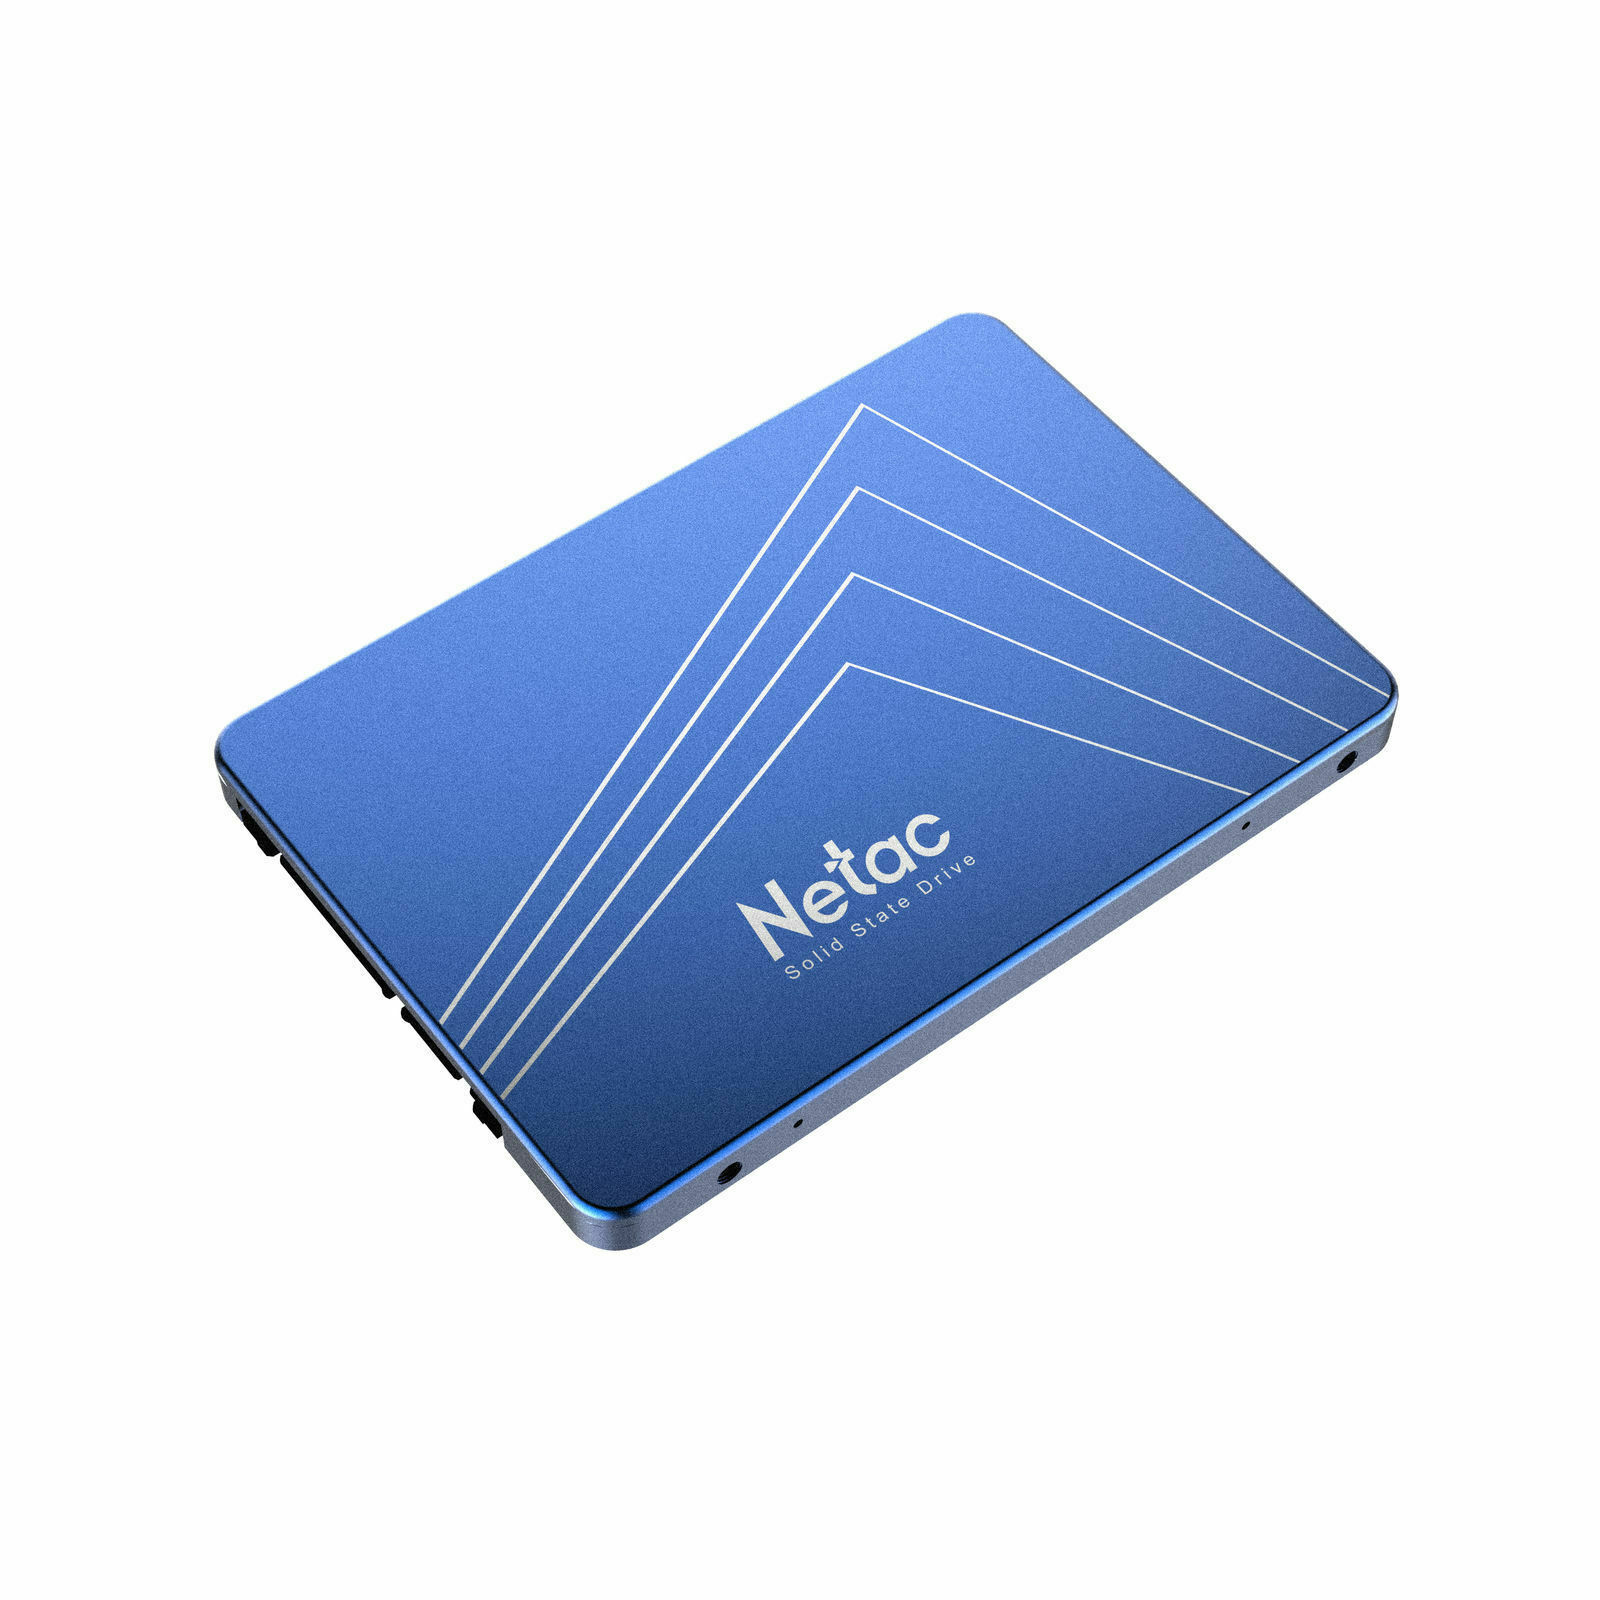 Netac-hd ssd n600s, disco rígido interno para laptop, 512 gb, 720gb, 360gb,...